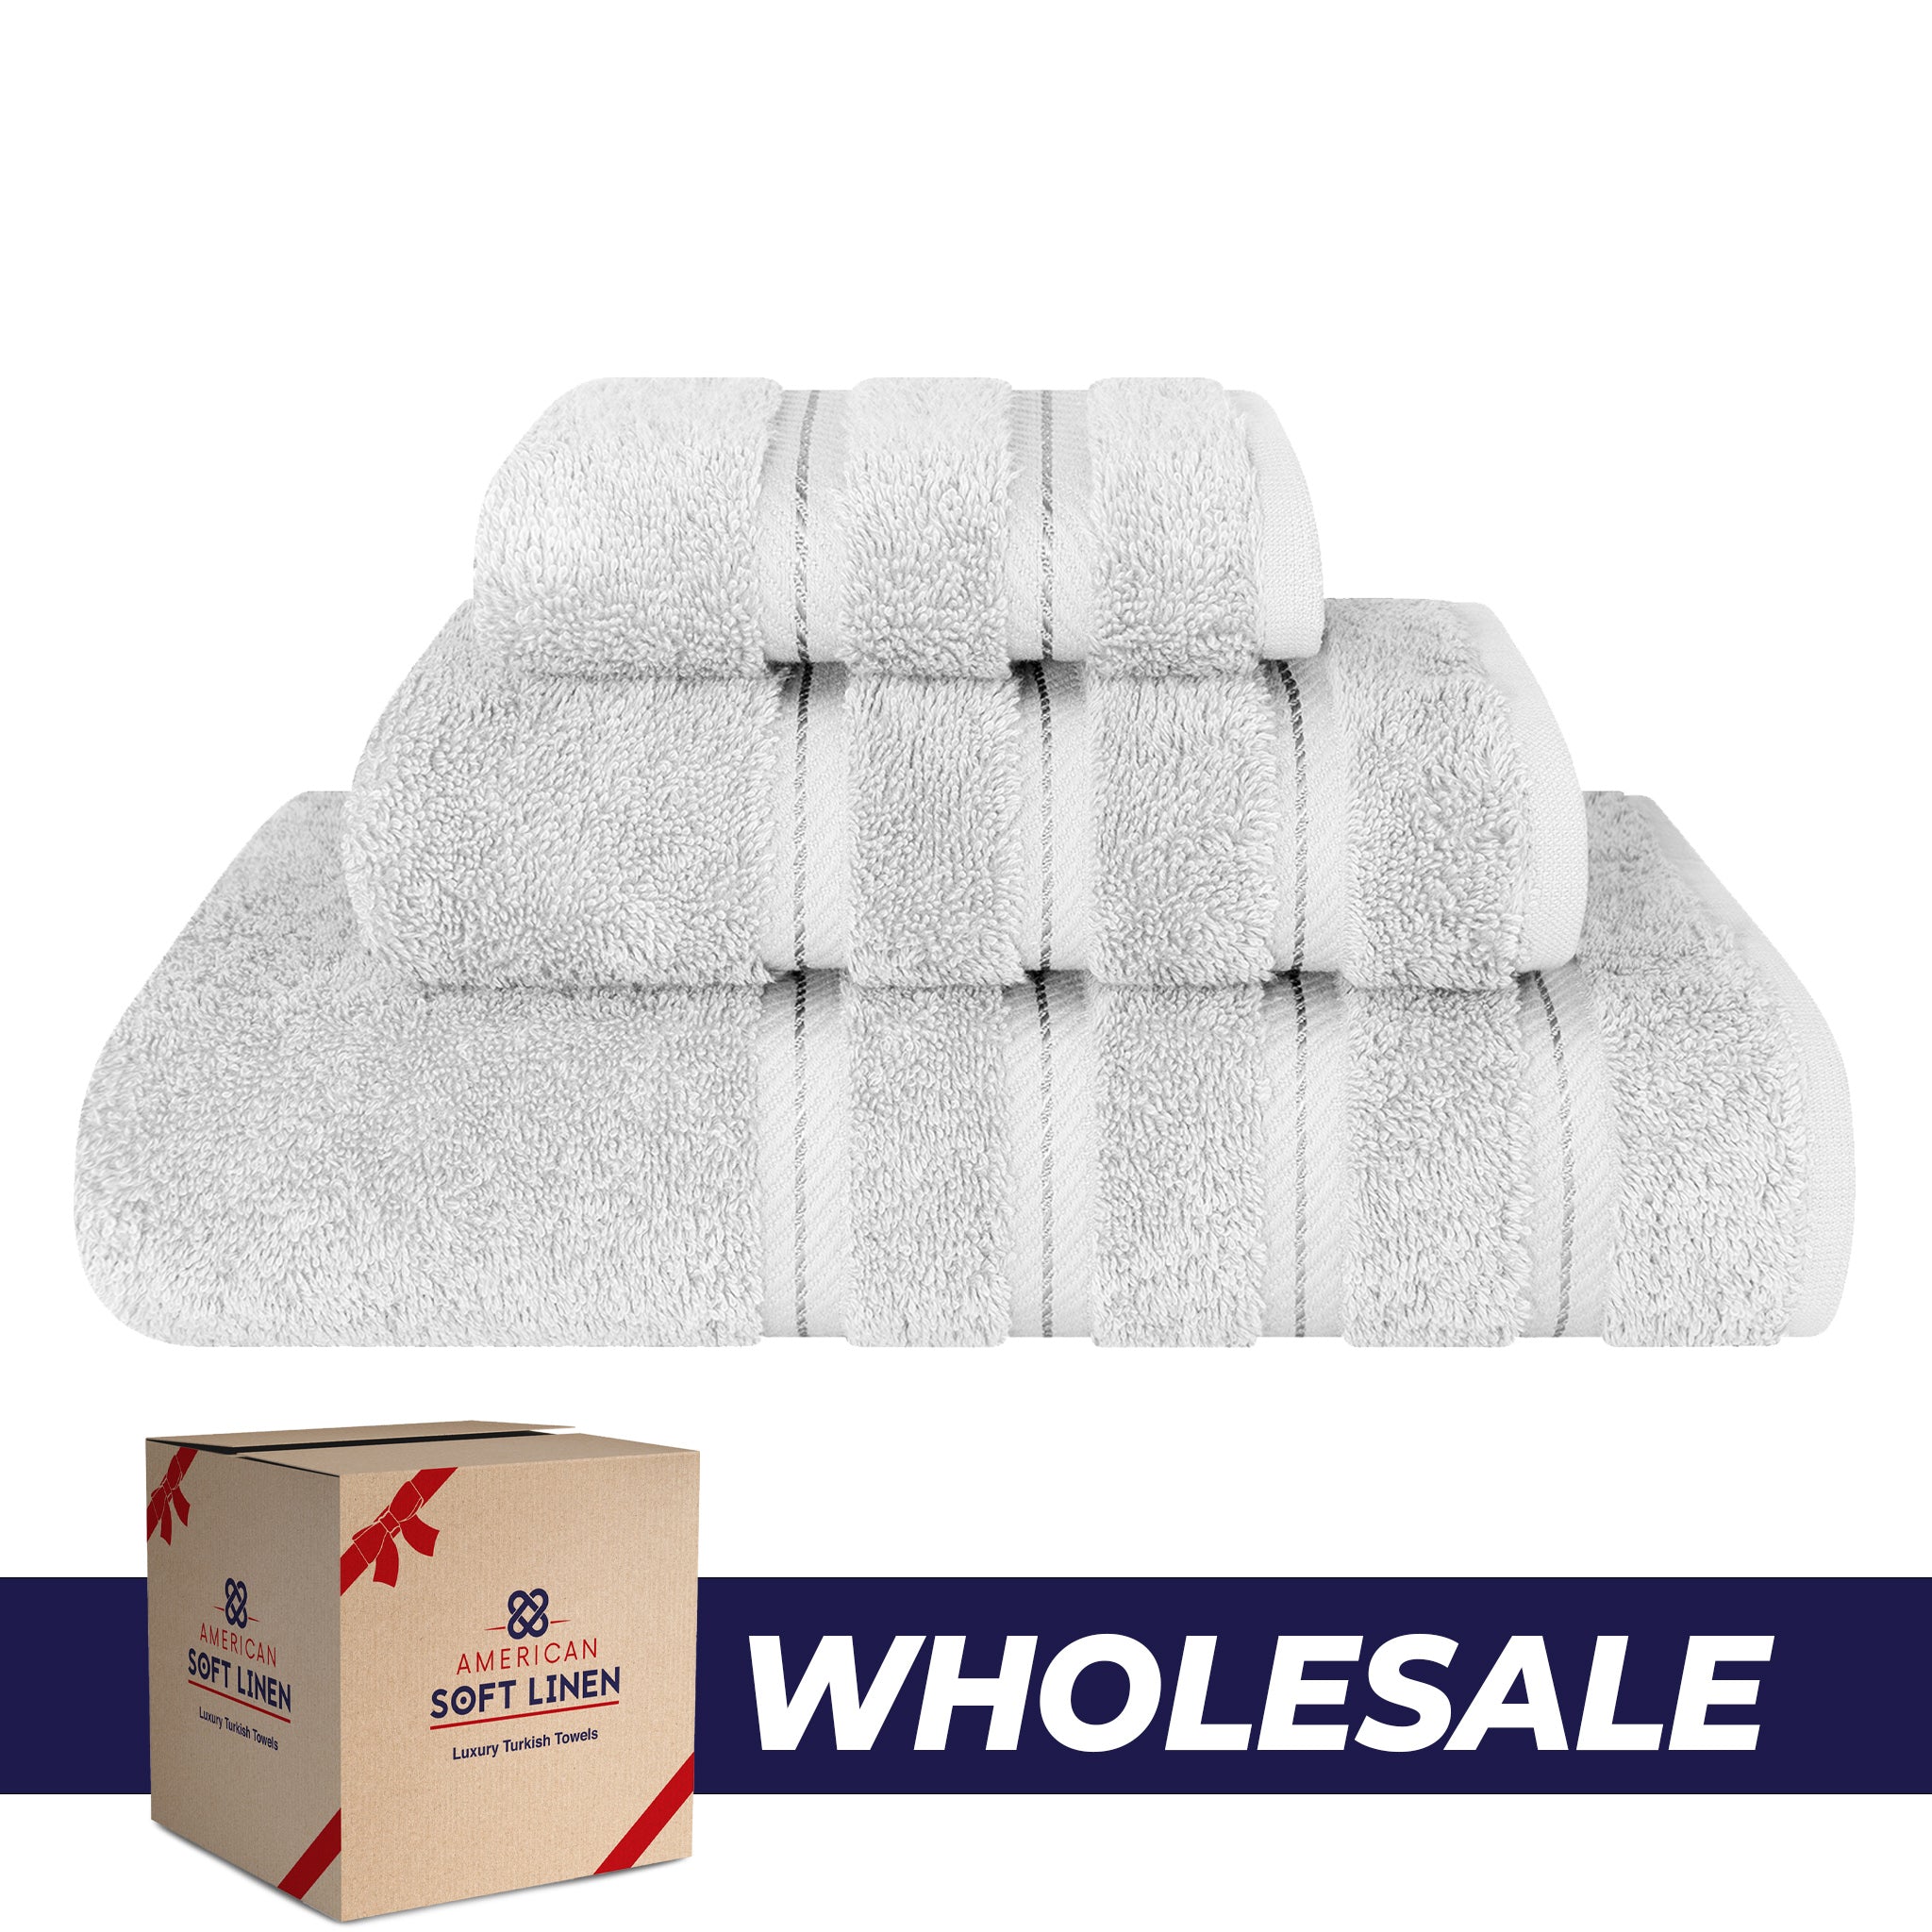 American Soft Linen 3 Piece Luxury Hotel Towel Set 20 set case pack silver-gray-0